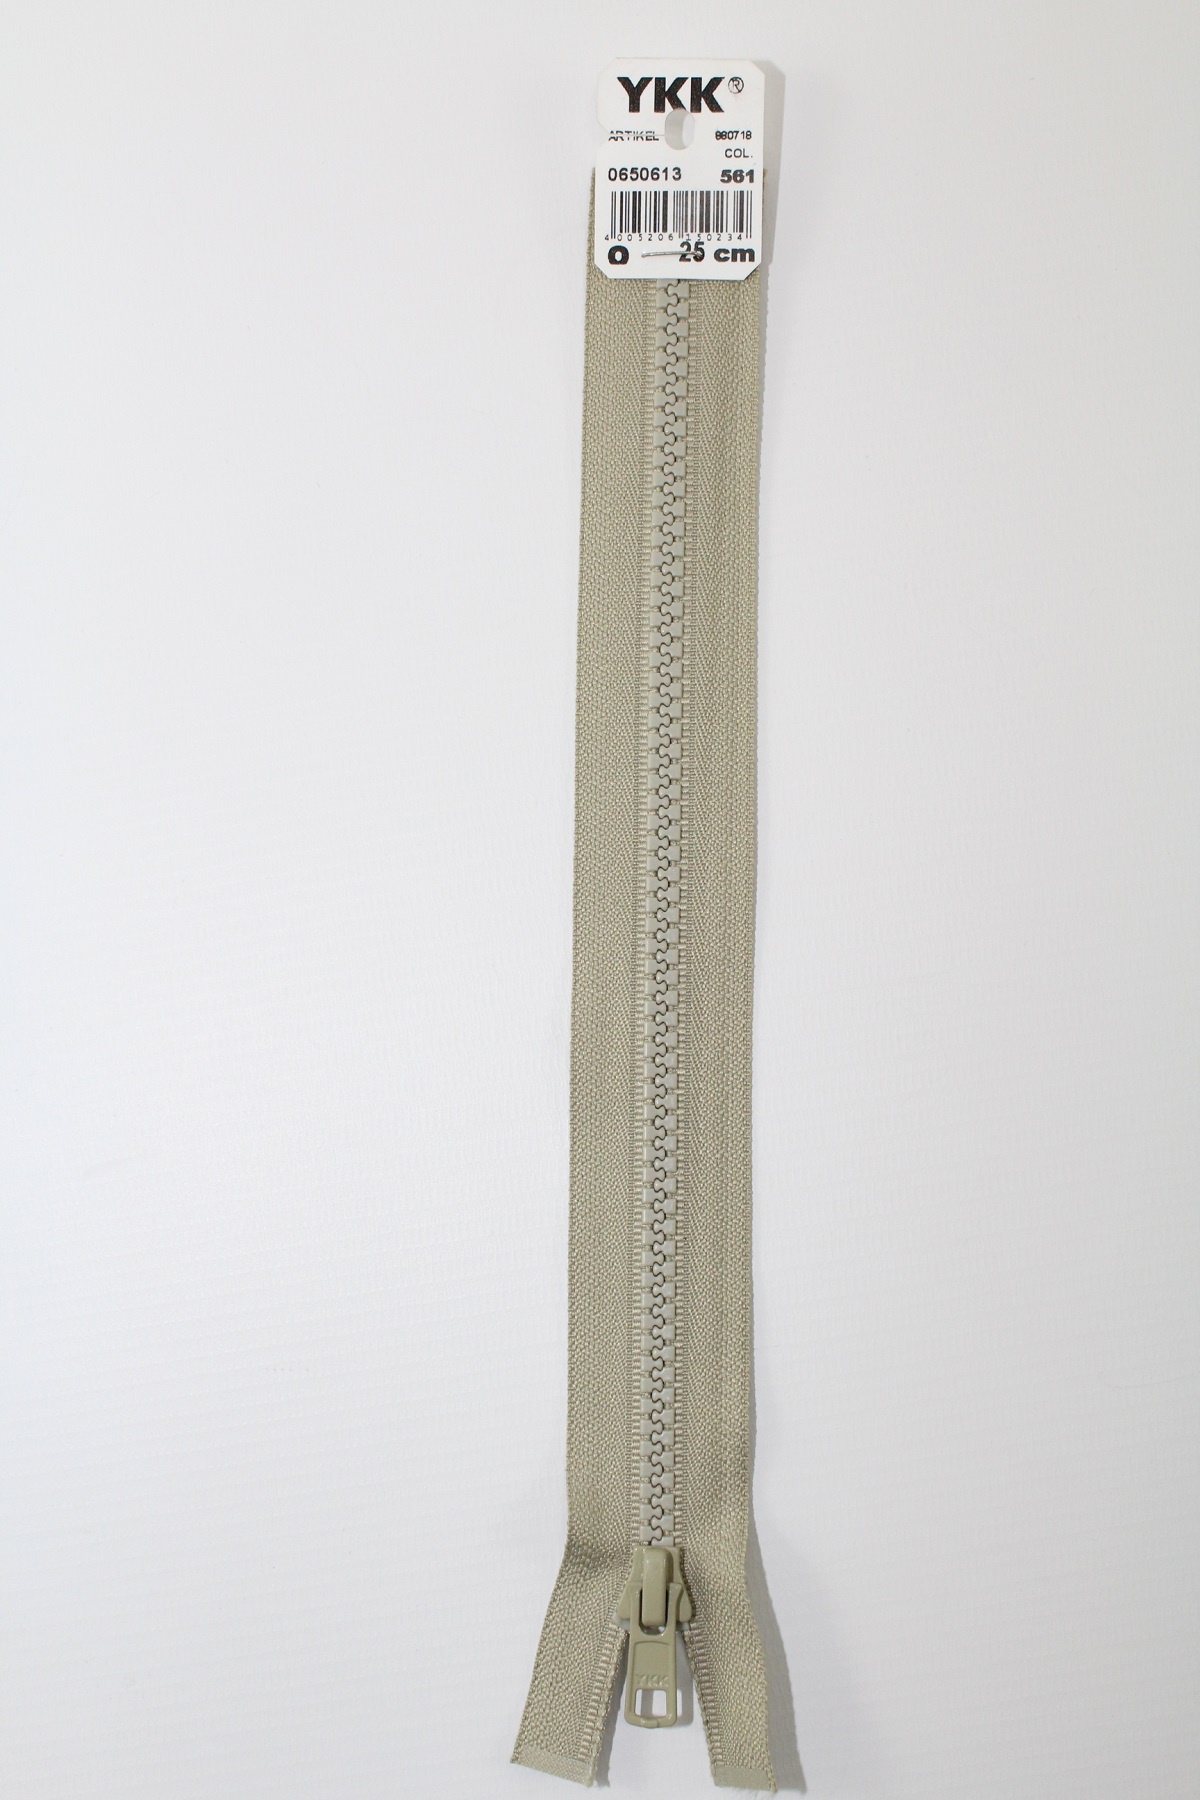 YKK - Reissverschlüsse 25 cm - 80 cm, teilbar, schlamm